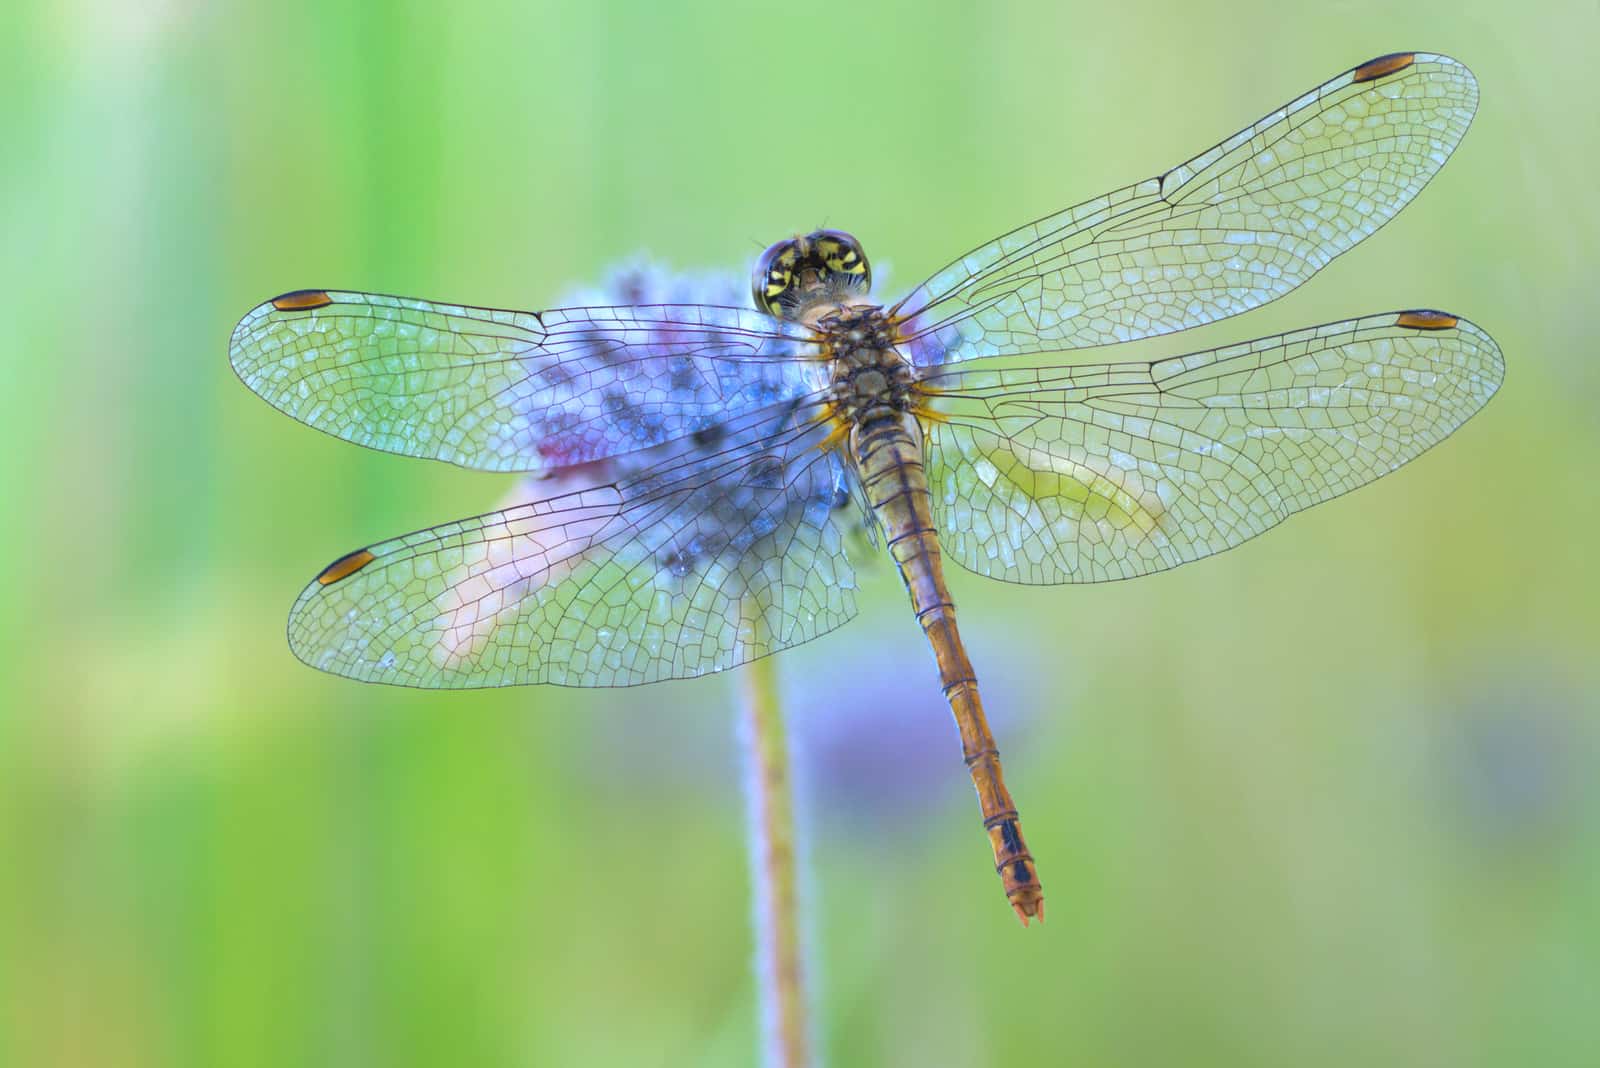 dragonfly sitting on a flower